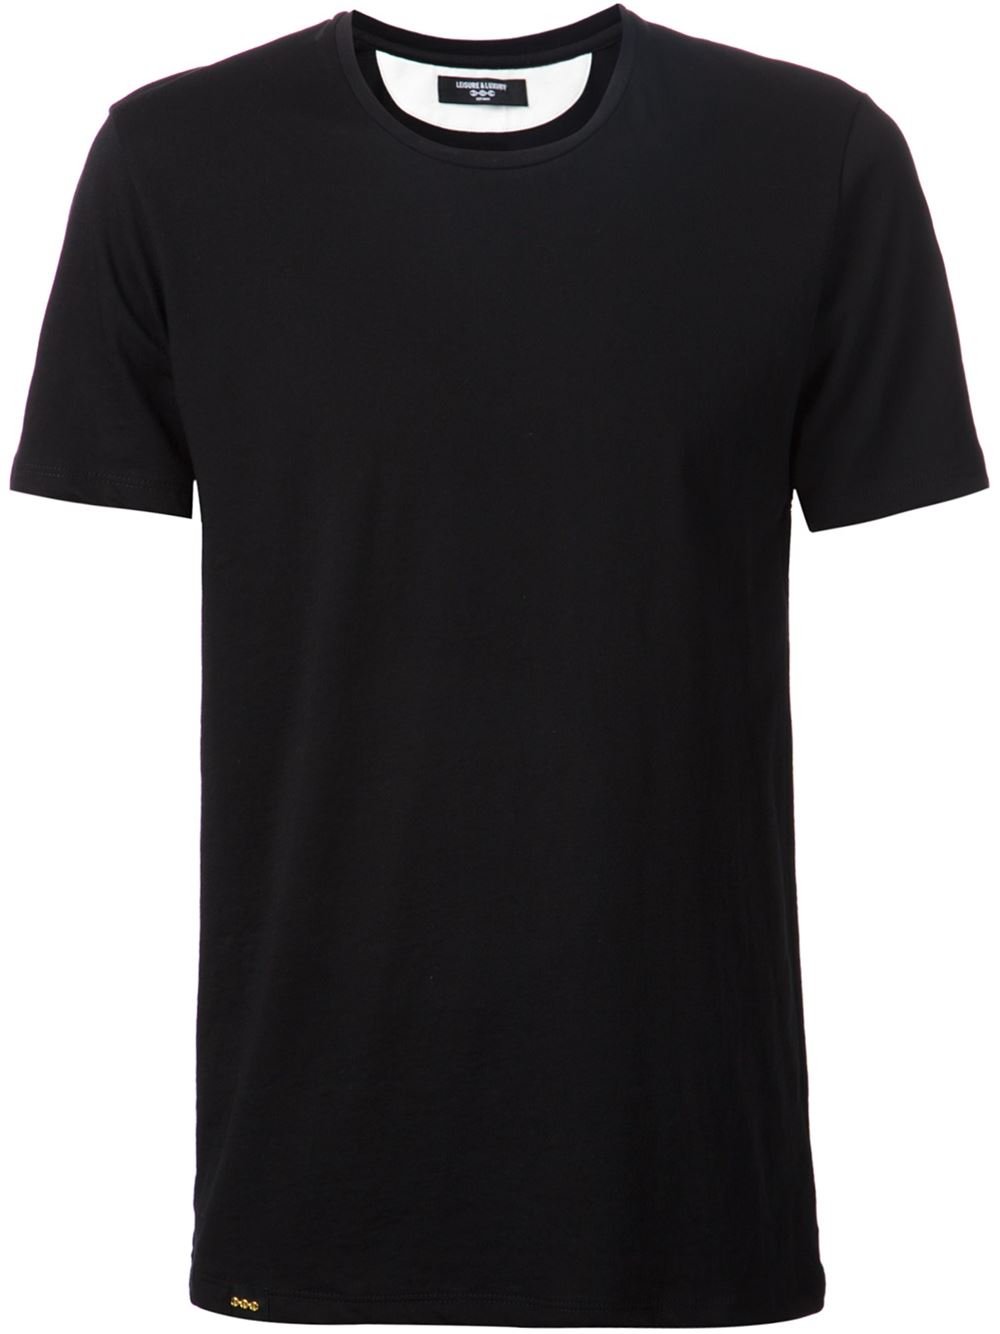 Subscription black round neck t shirt, Givenchy double logo t shirt, short sleeve summer maxi dress. 